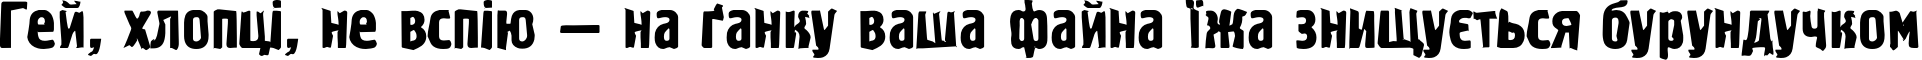 Пример написания шрифтом GraffitiOne текста на украинском